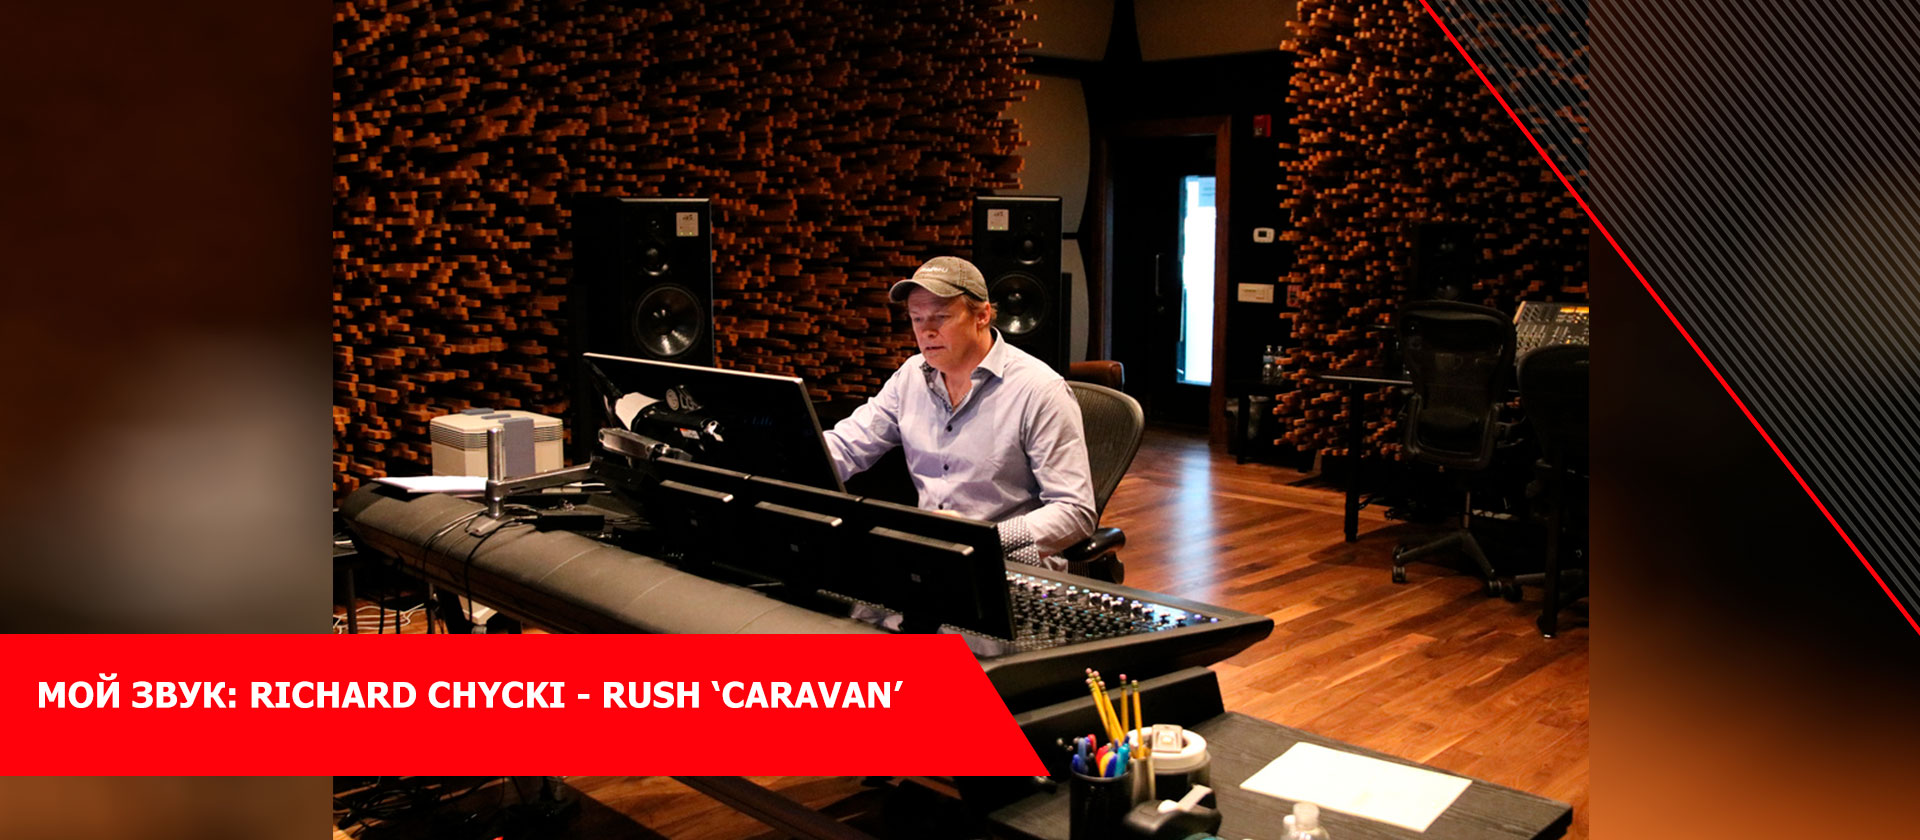 Мой звук: Richard Chycki - Rush ‘Caravan’